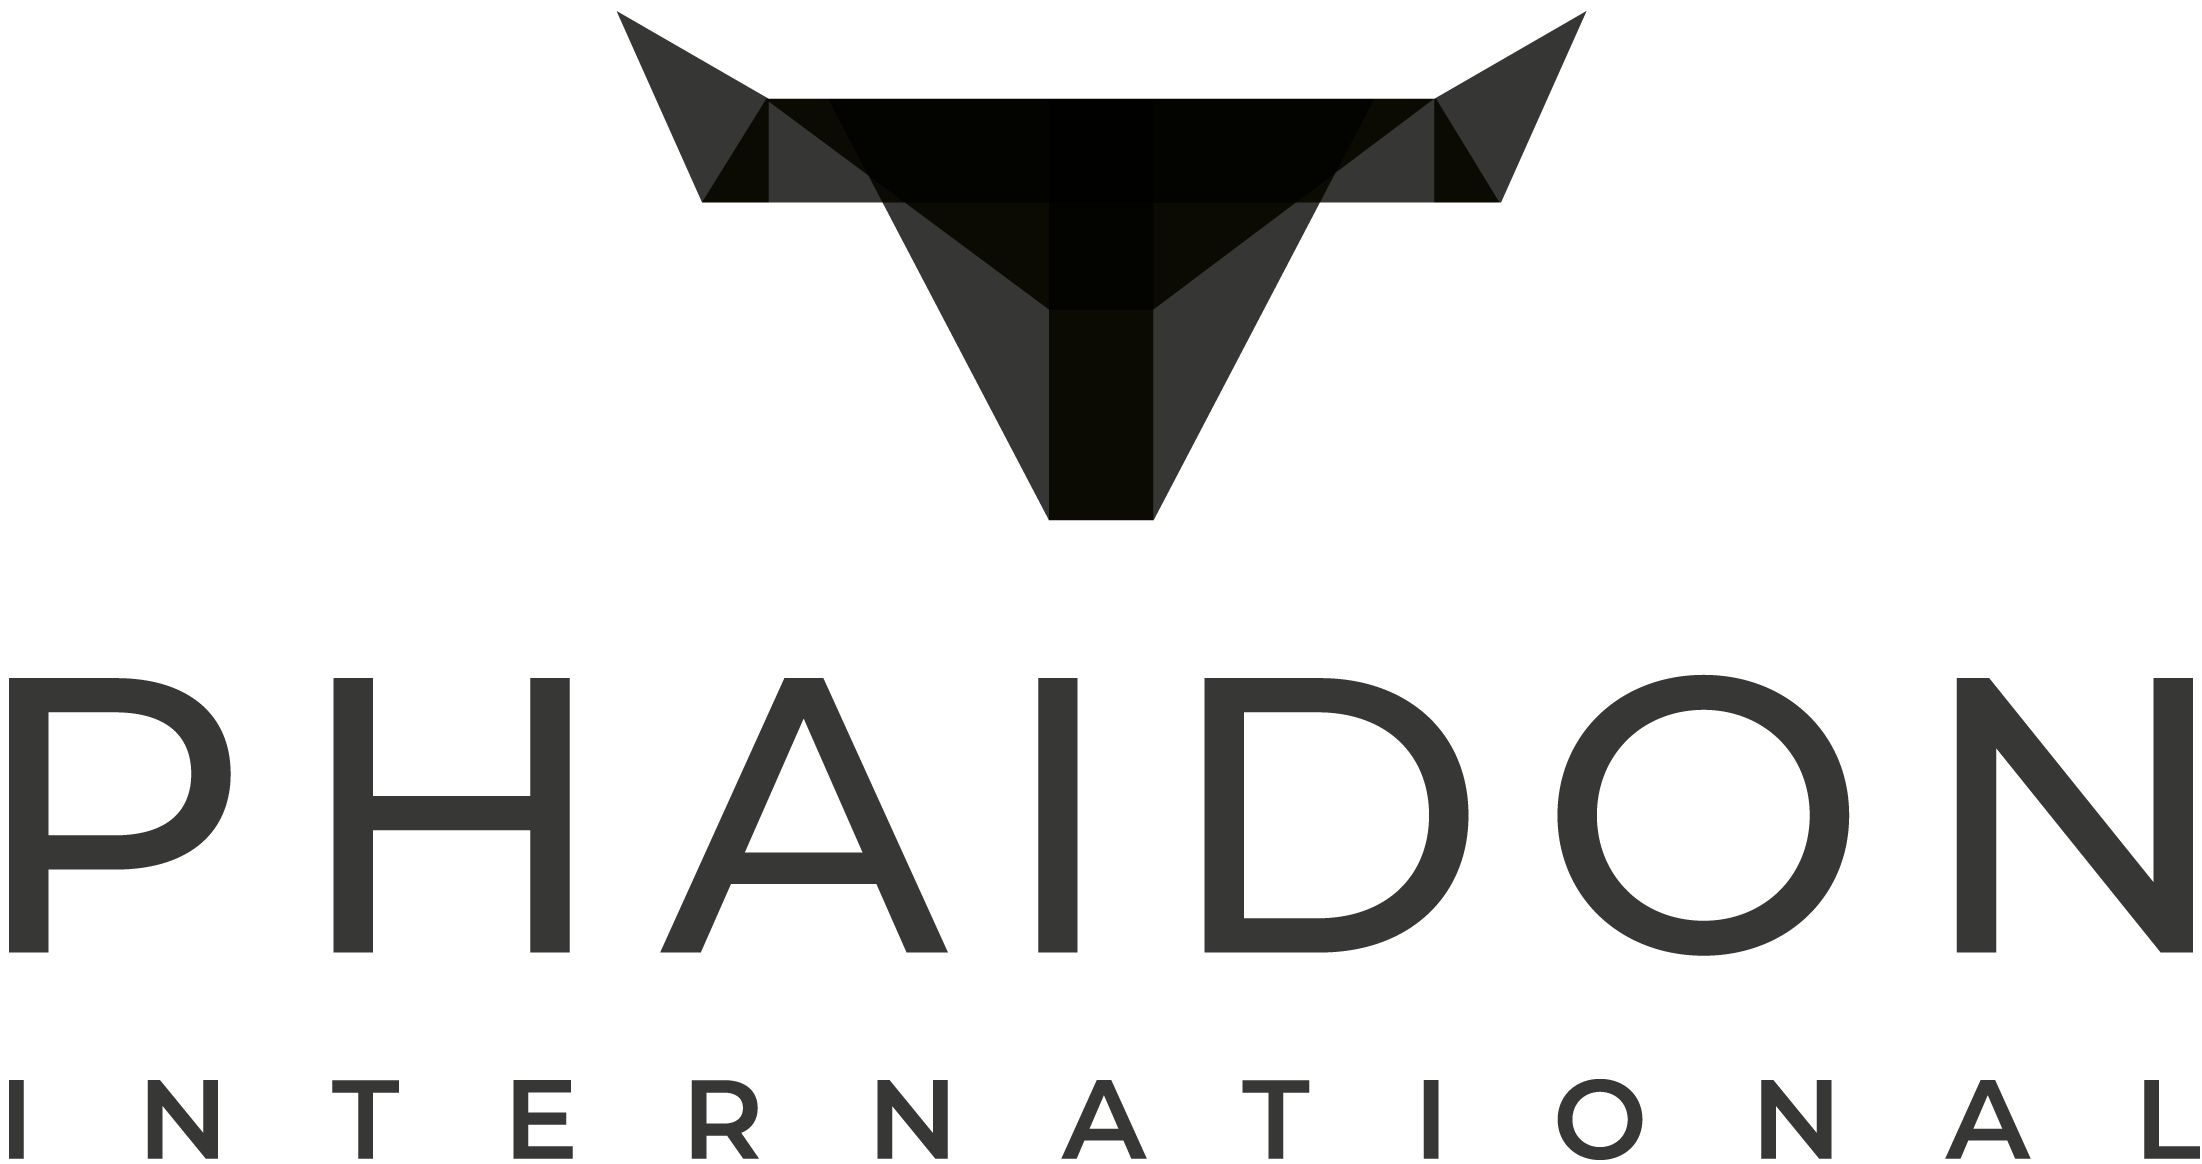 Phaidon International